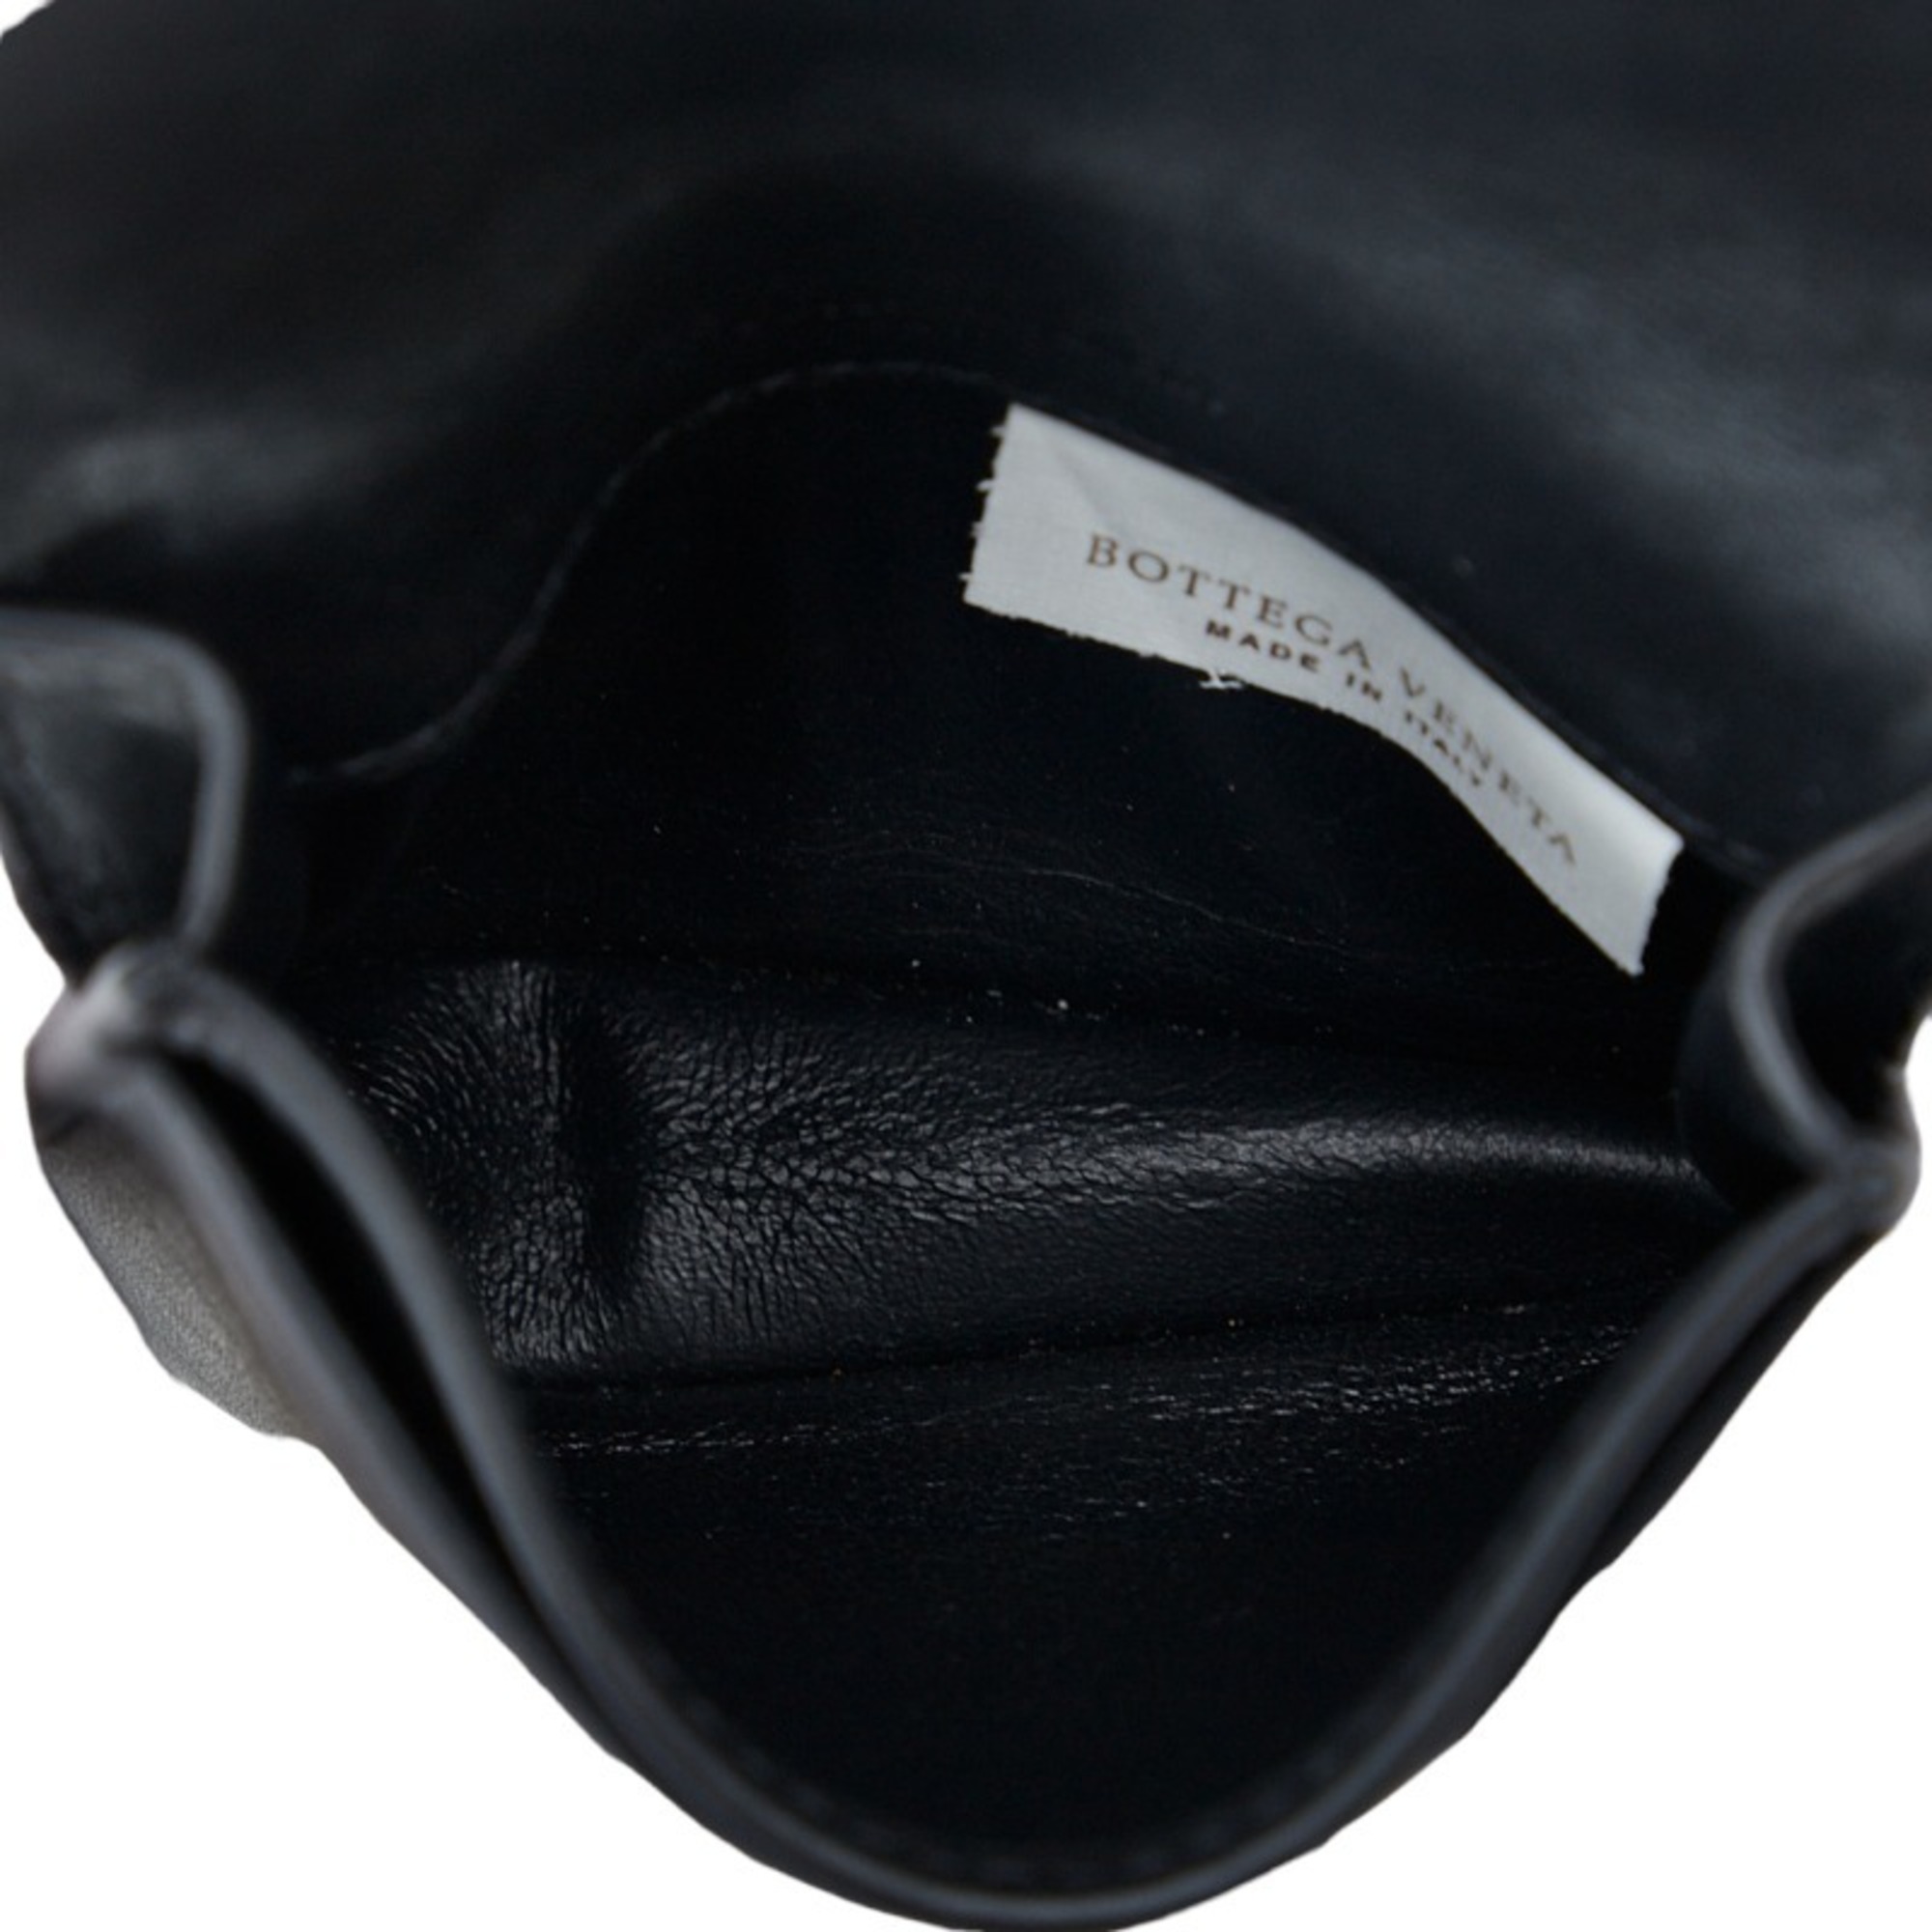 Bottega Veneta Business Card Holder Case Black Leather Men's BOTTEGAVENETA